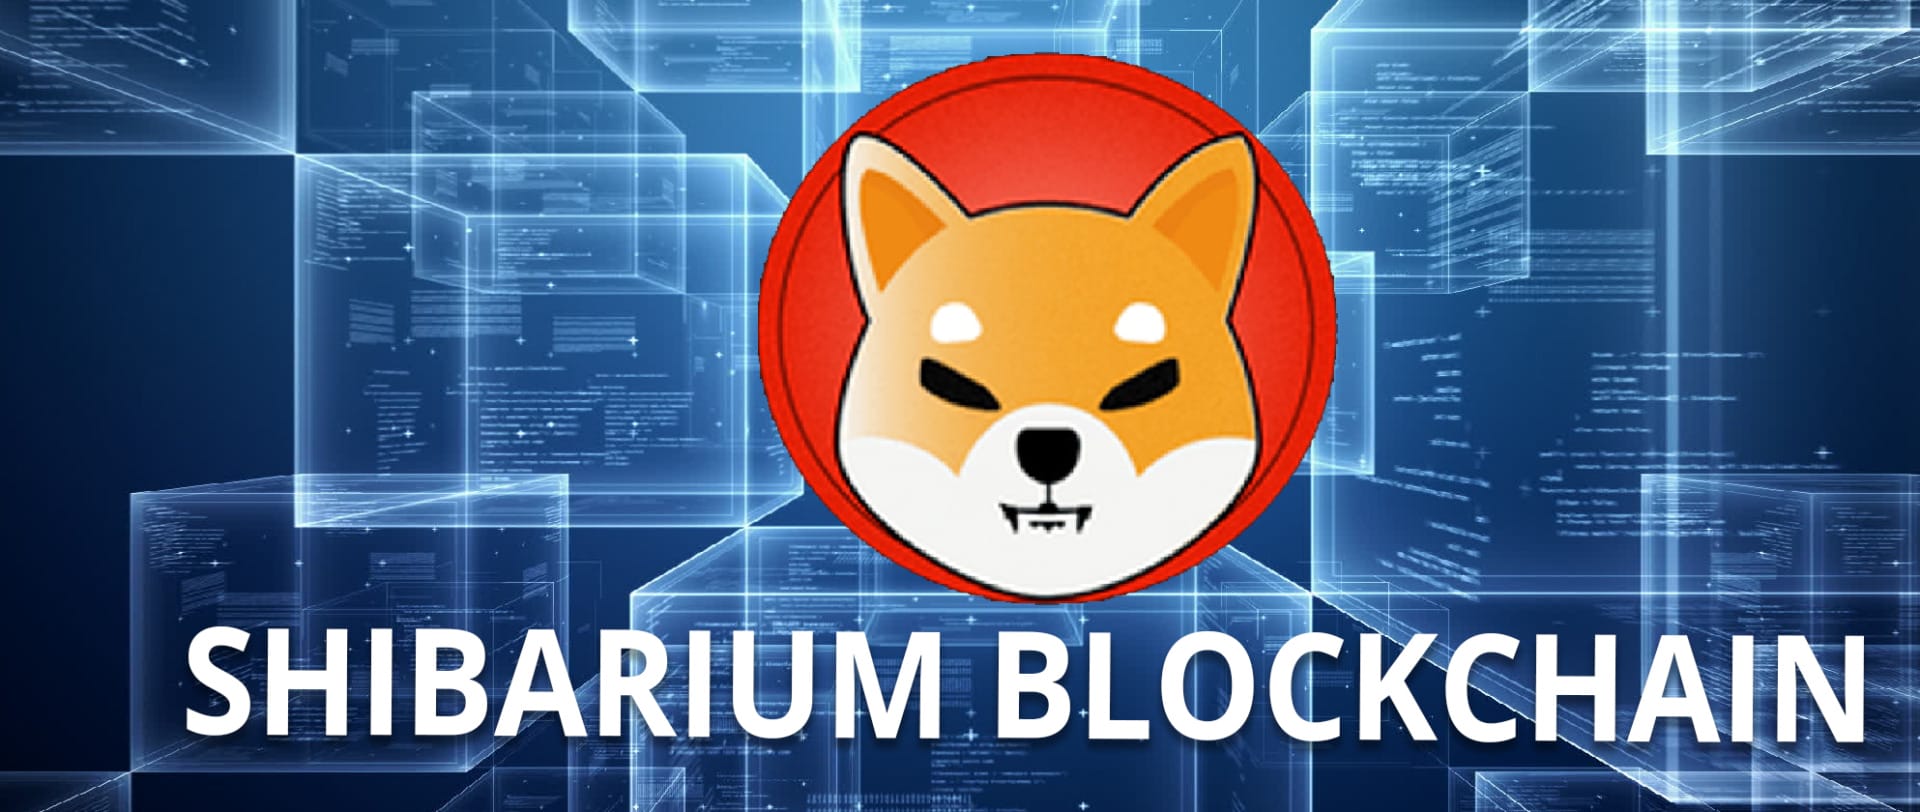 Shibarium blockchain 1